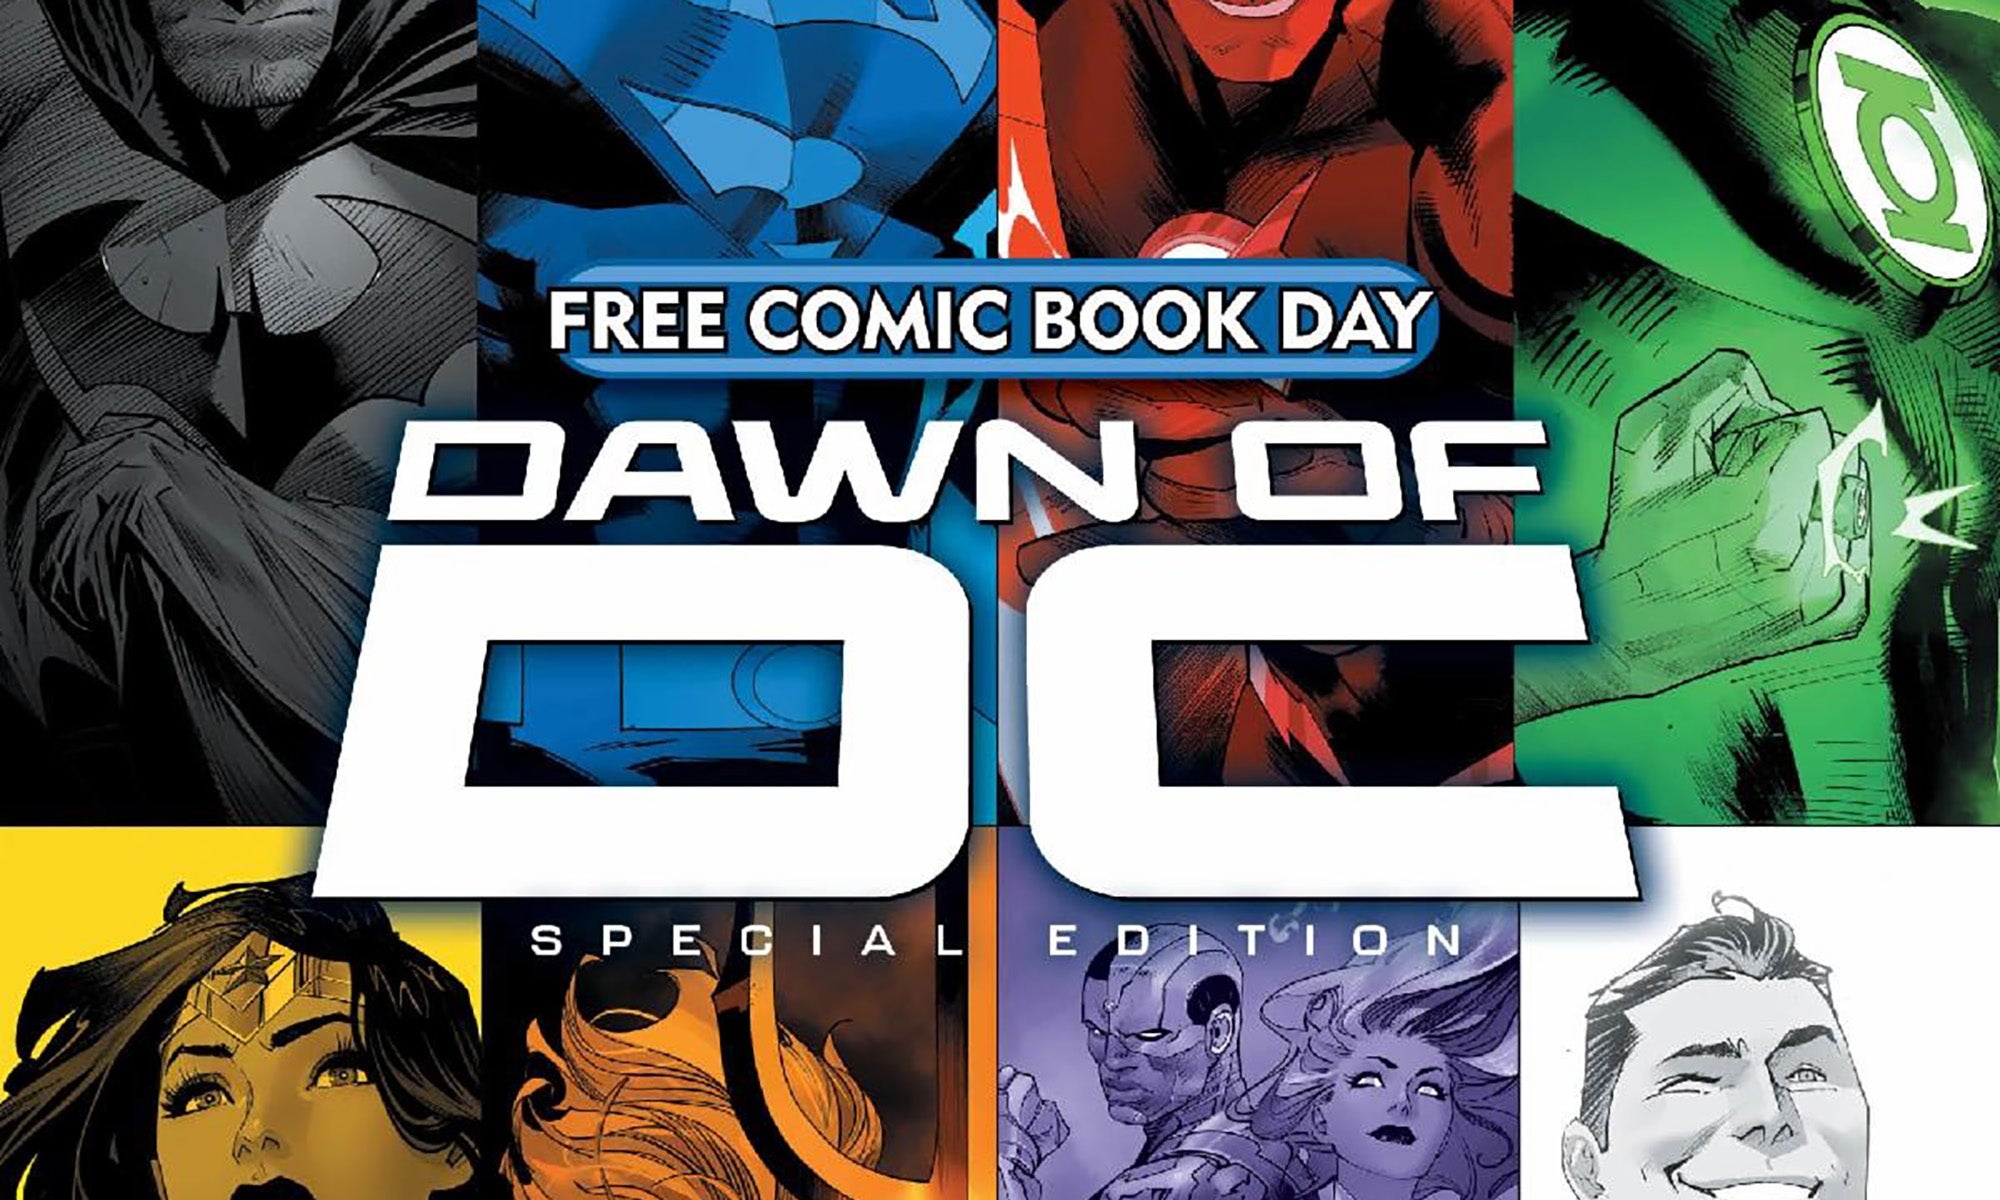 Dawn of DC #1